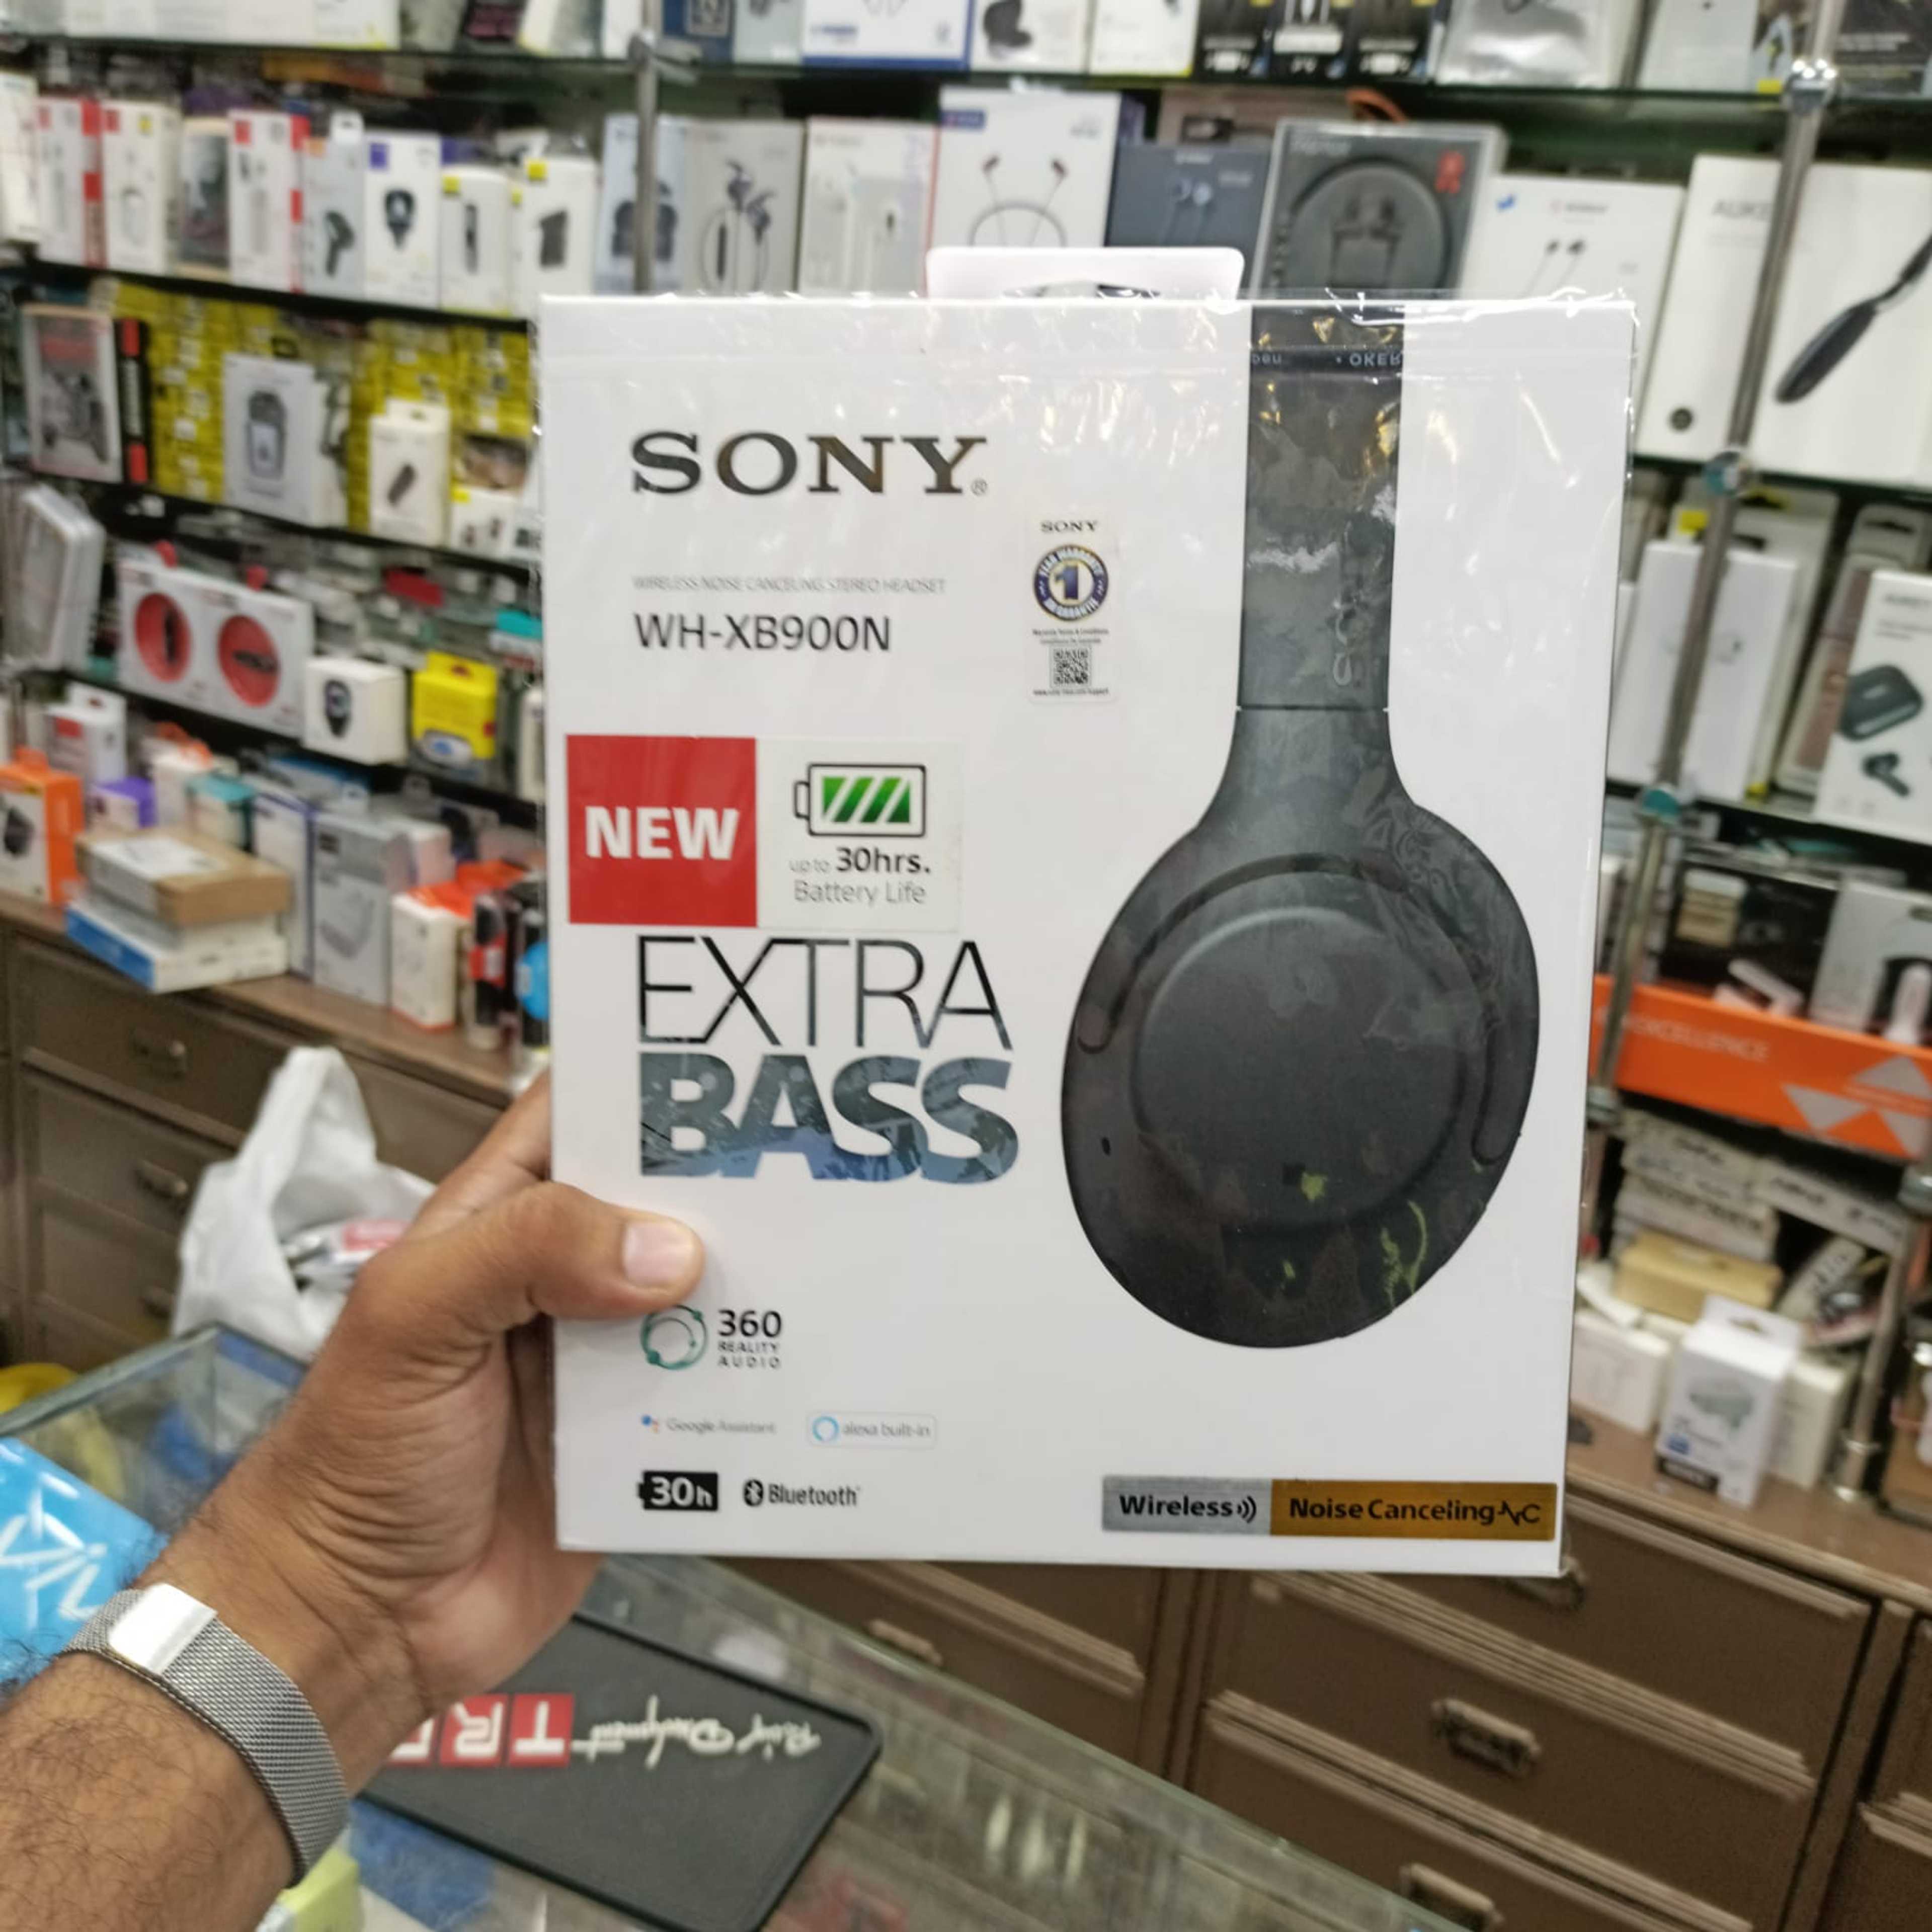 Sony WH-XB900N New Extra Bass Wireless Headphones